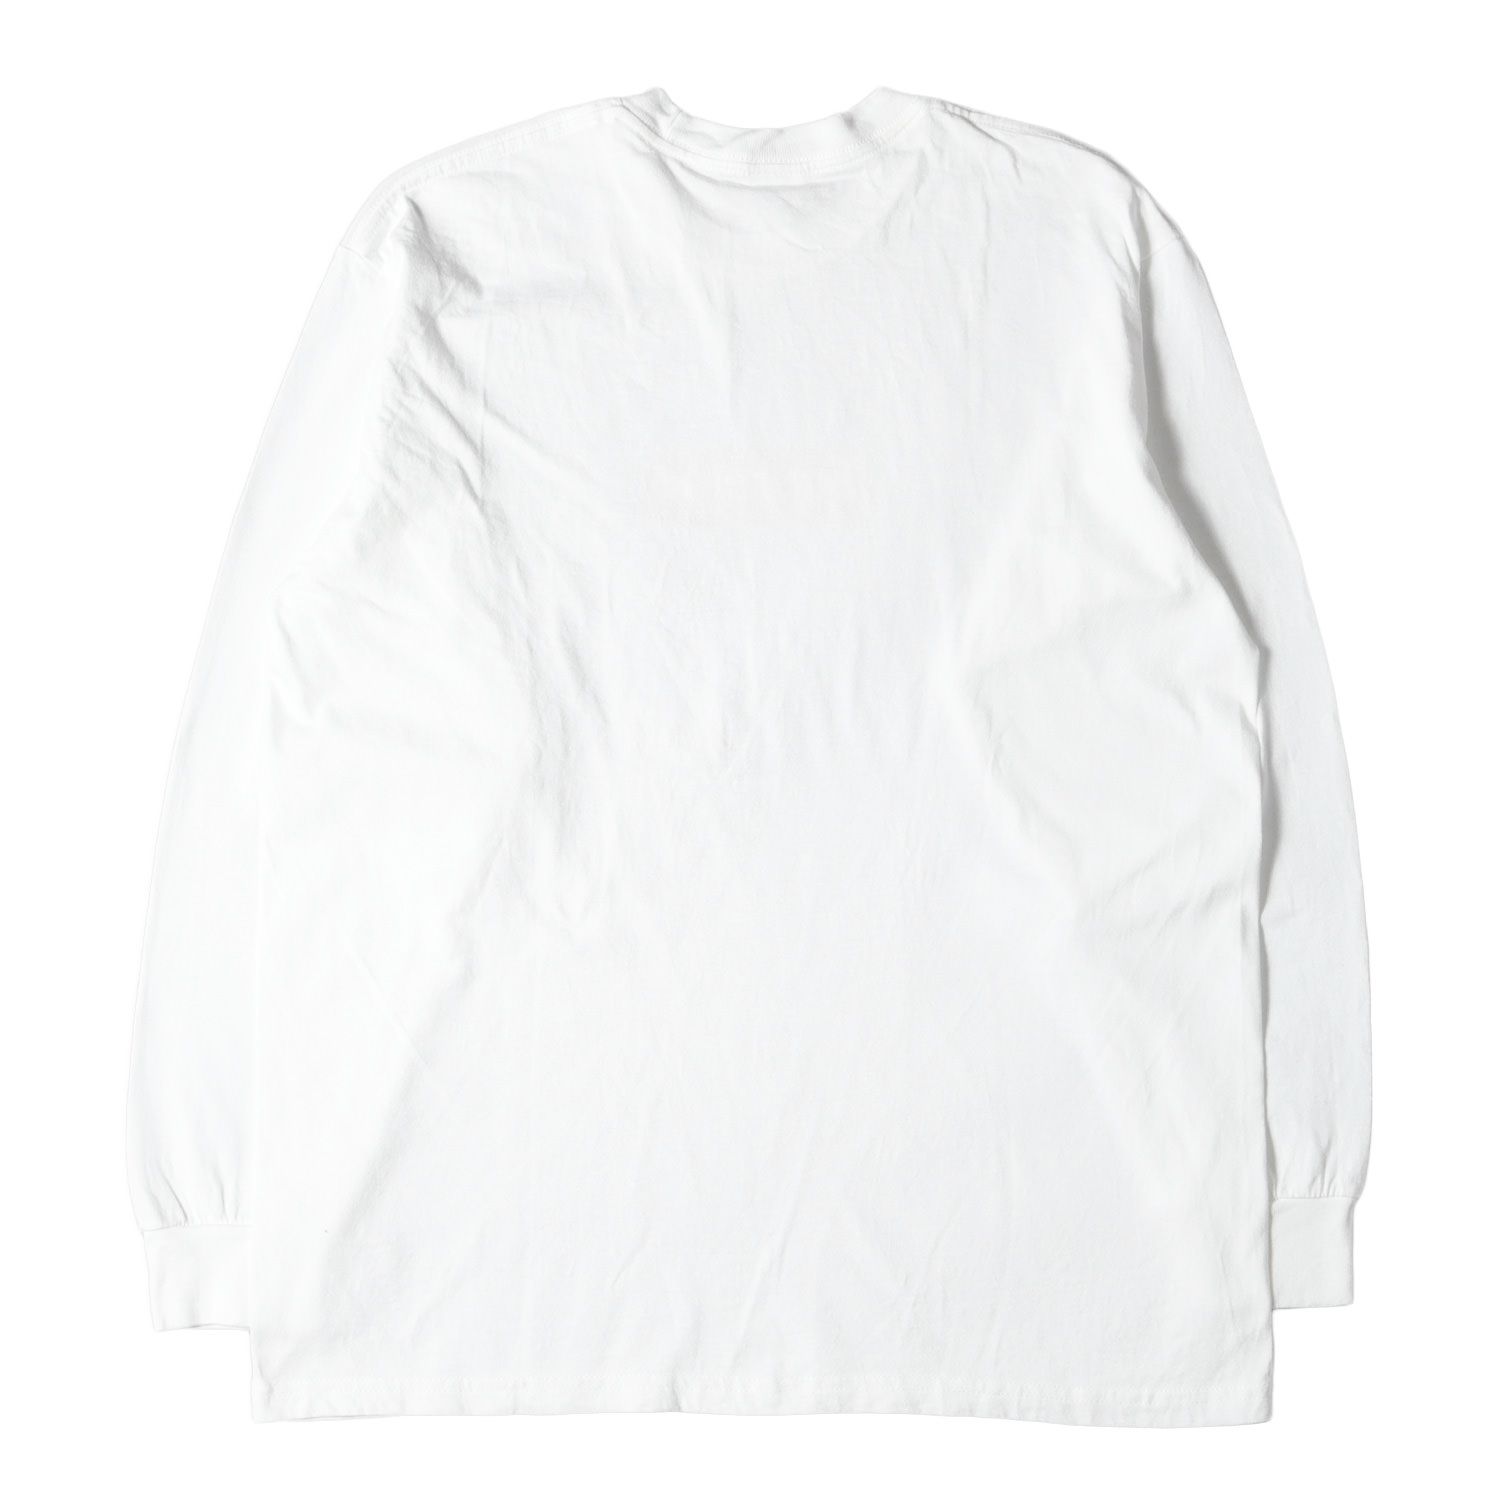 Supreme シュプリーム Tシャツ サイズ:L 20AW ボックスロゴ ロングスリーブ Tシャツ Box Logo L/S Tee ホワイト 白  トップス カットソー 長袖 クルーネック ストリート ブランド